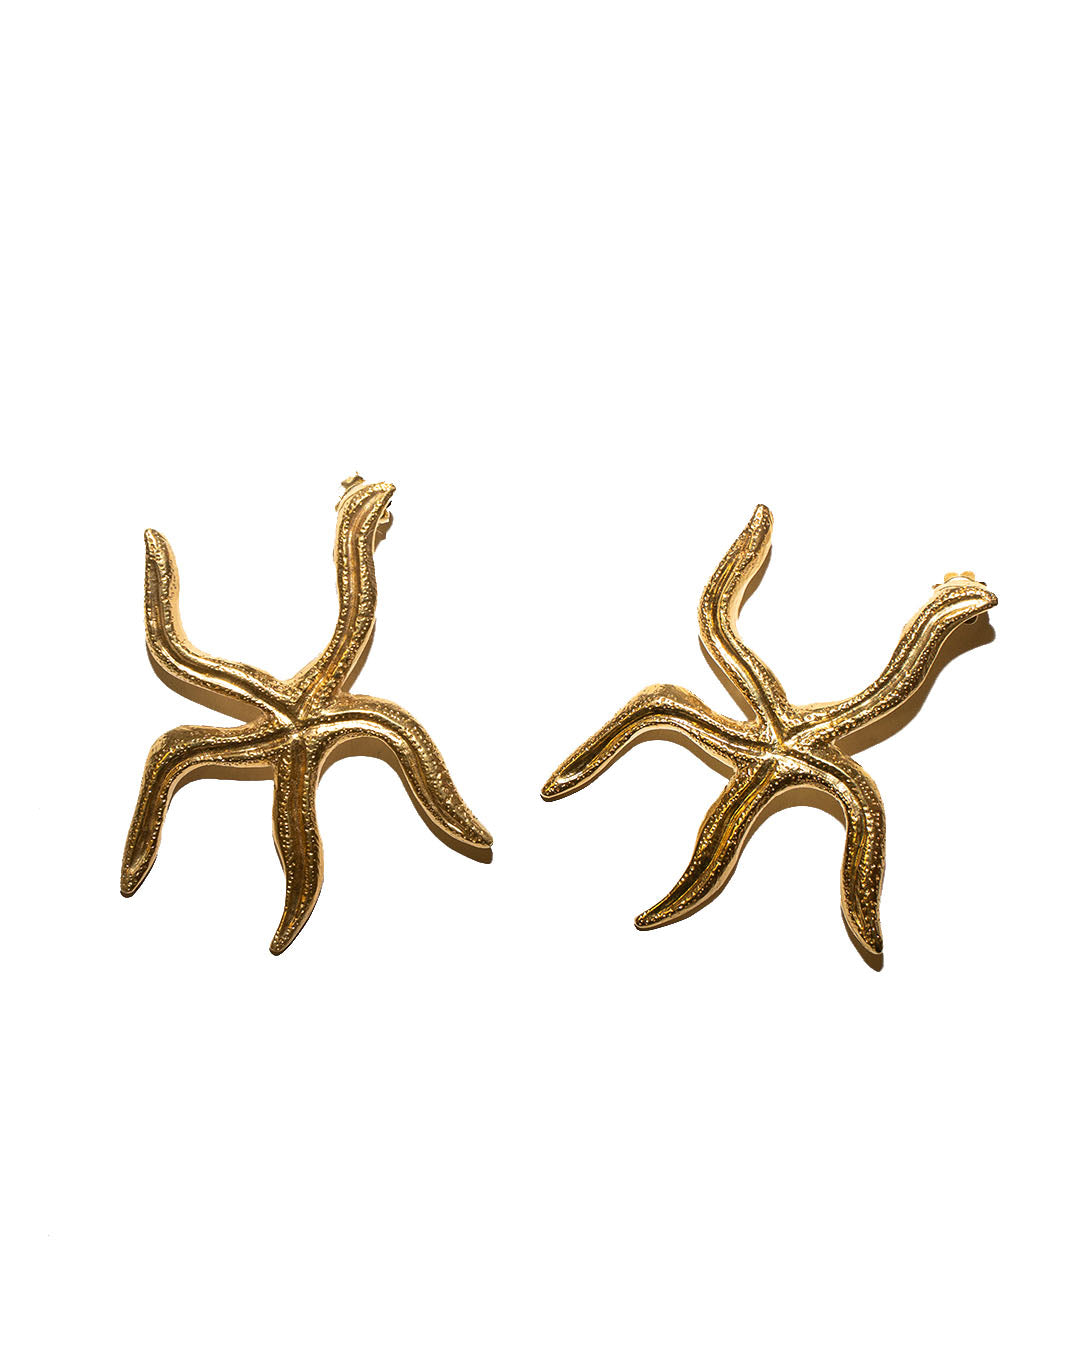 Handmade starfish earrings